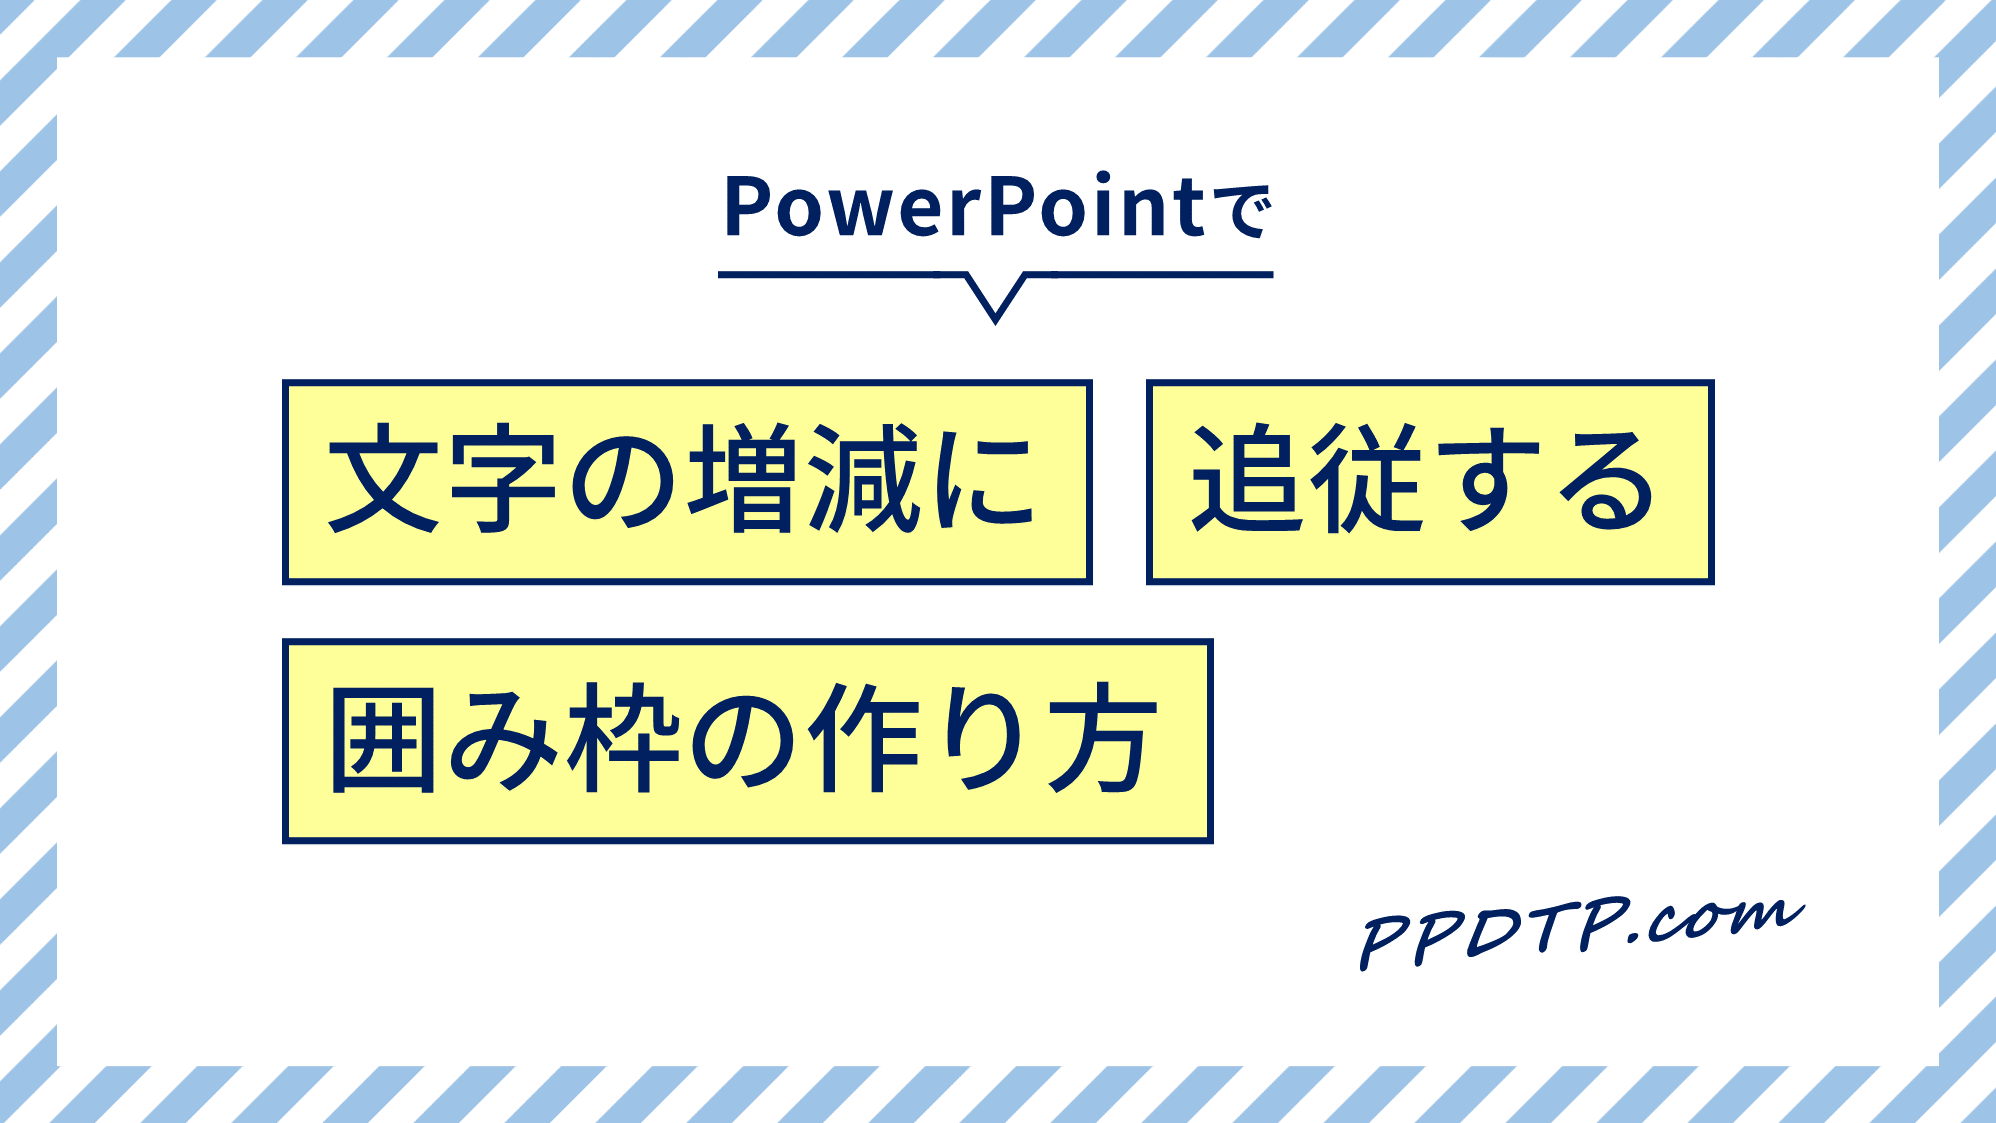 Powerpointで文字の増減に追従する囲み枠の作り方 Ppdtp